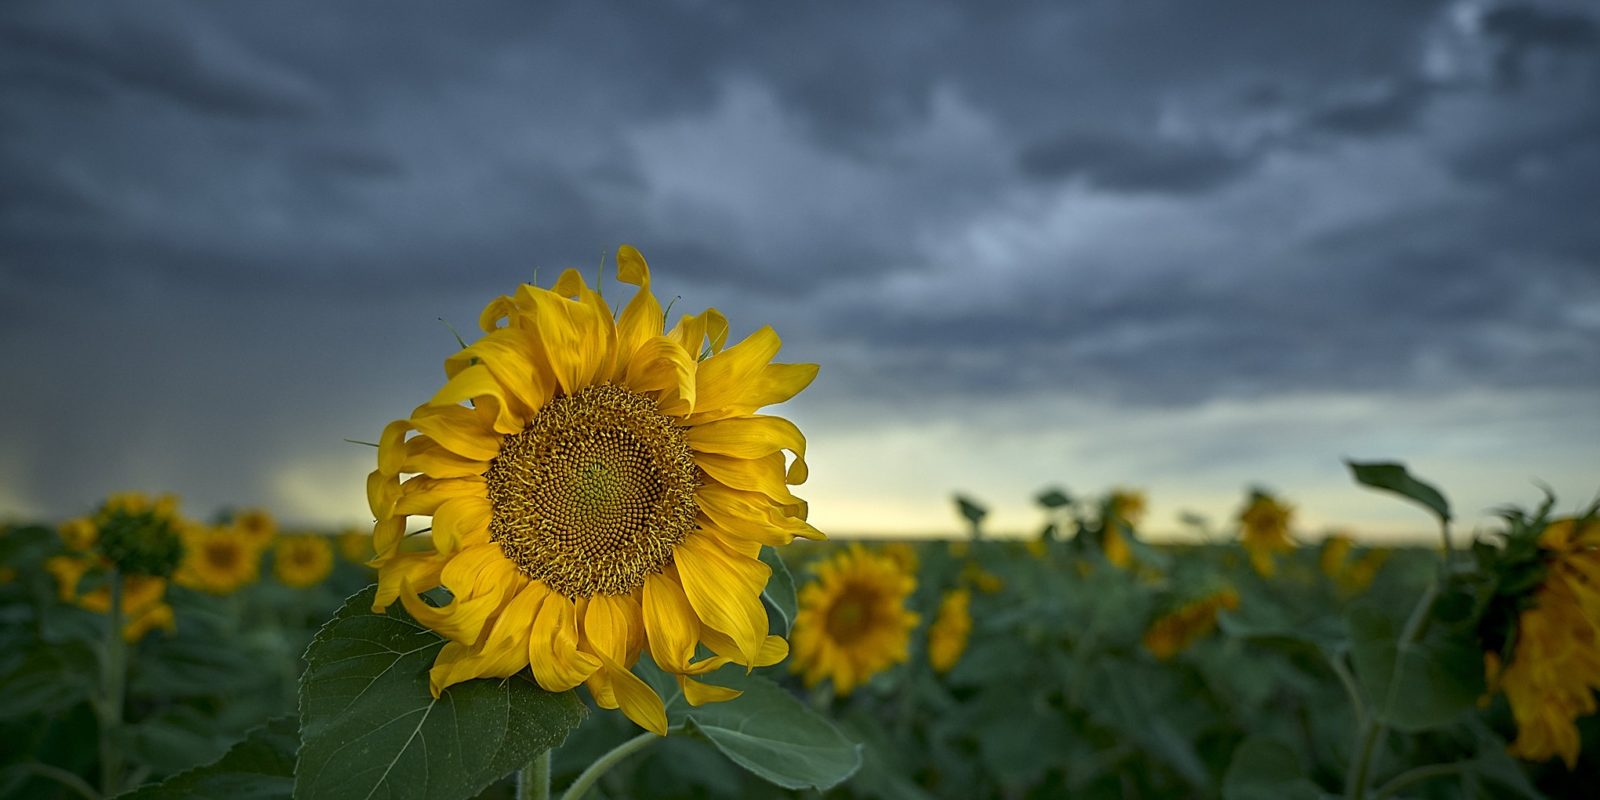 Sunflowers, national flower of Ukraine (Copyright: Larry Goodwin/Flickr.com)